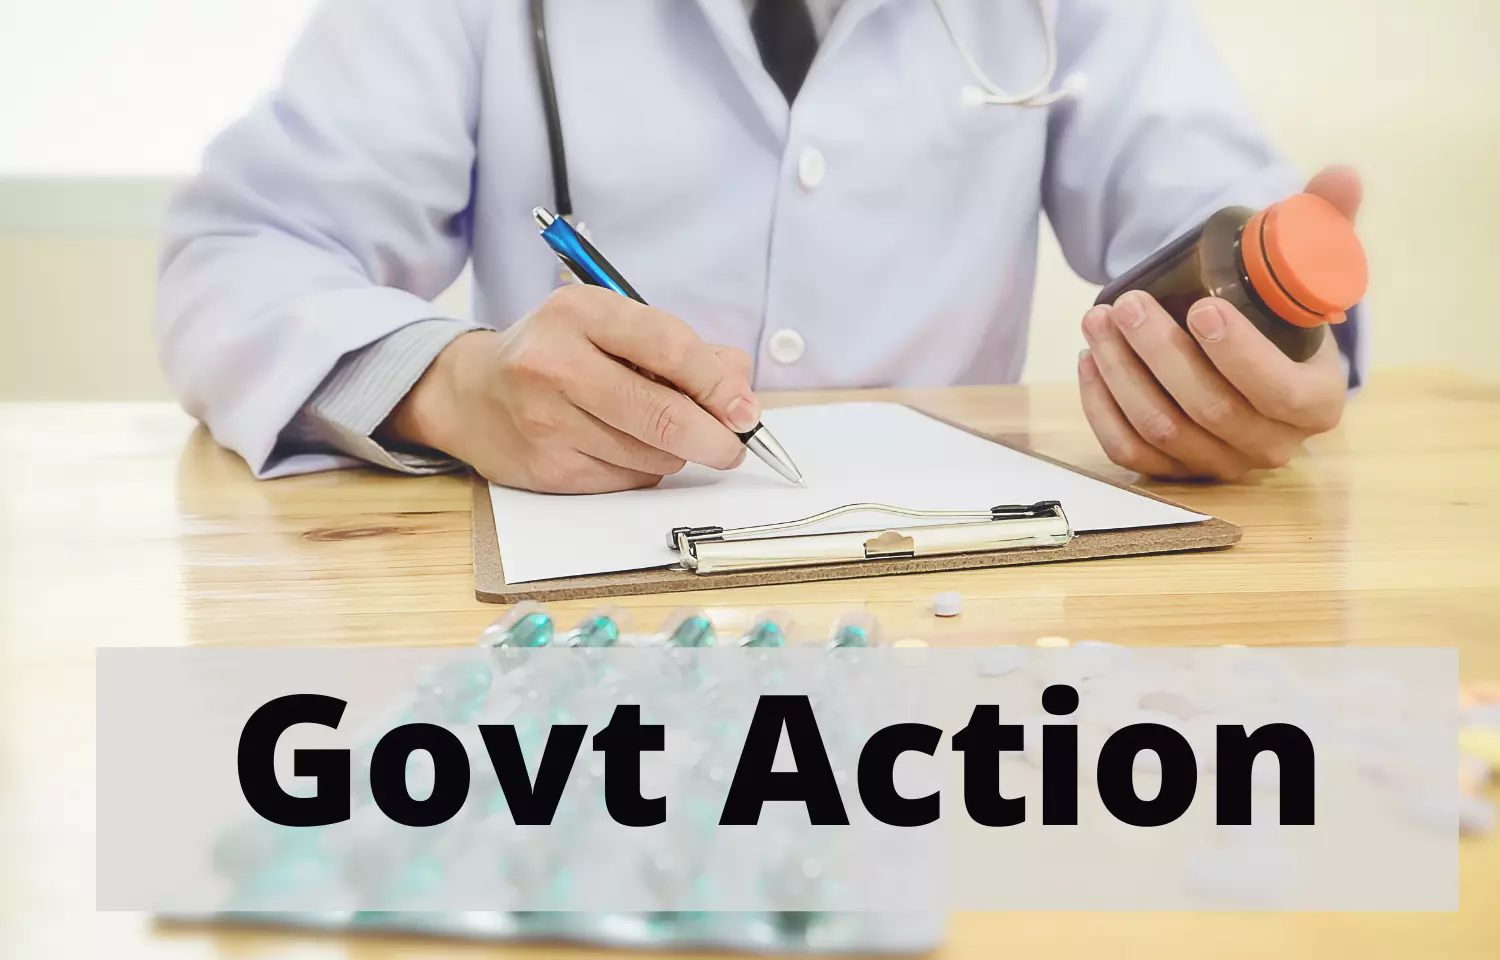 Prescribe generic medicines or face action: CM Chhattisgarh slams Govt doctors